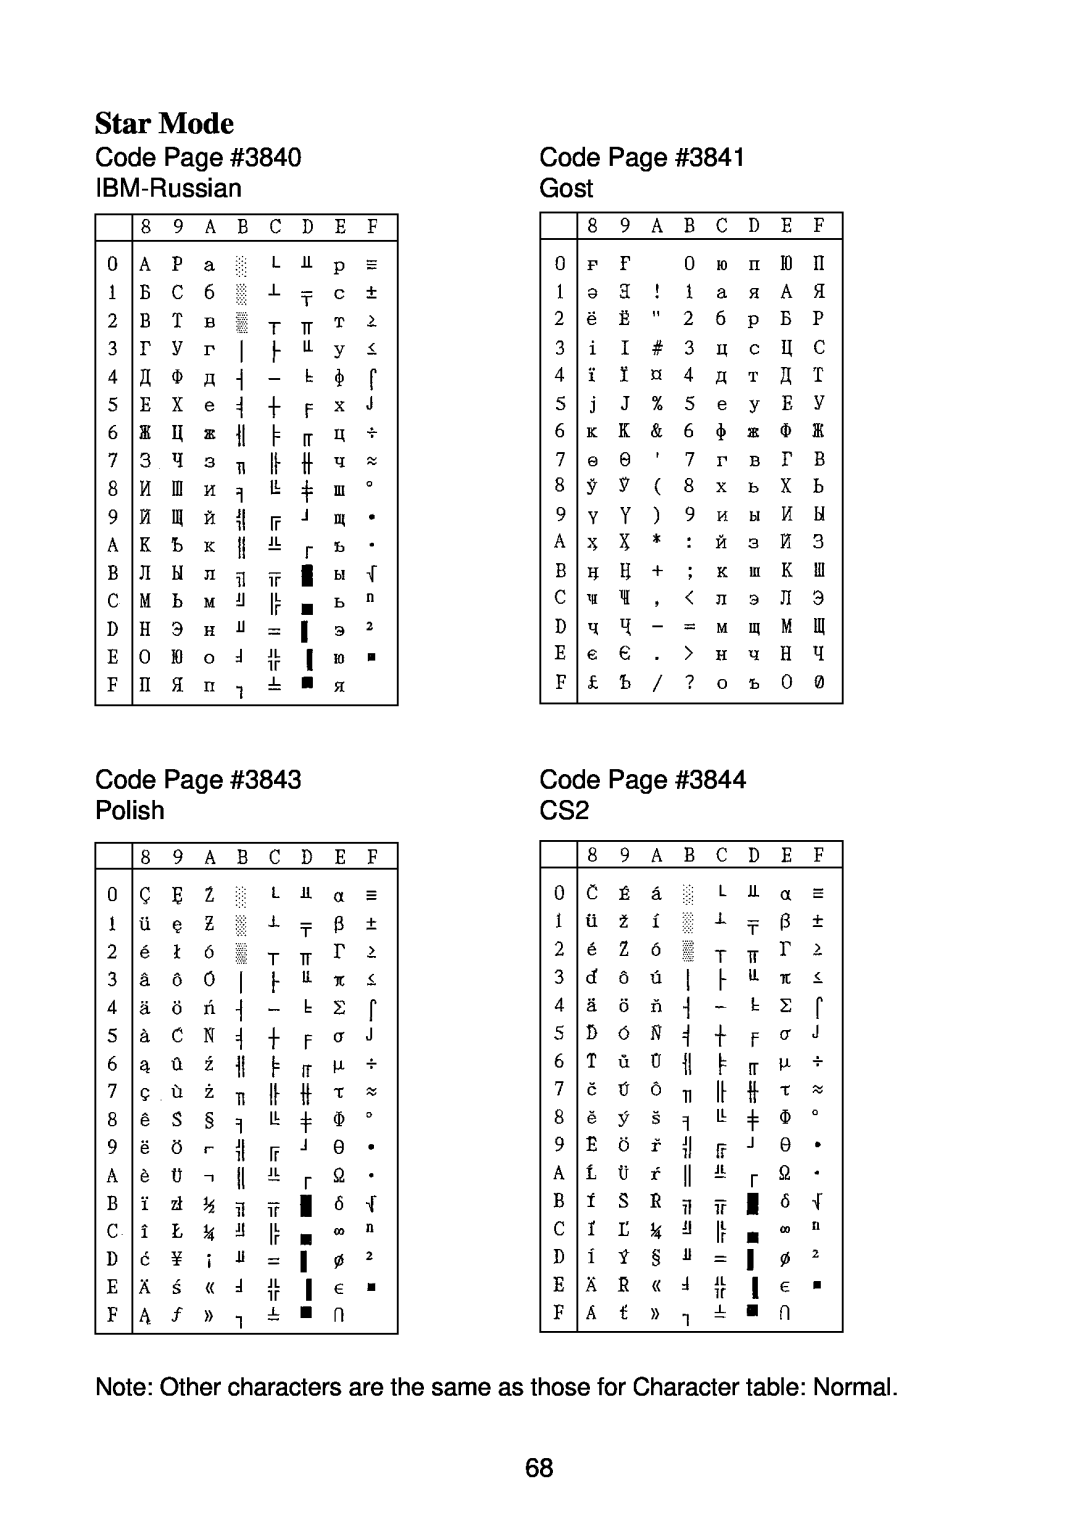 Star Micronics SP2000 manual Code Page #3840 IBM-Russian Code Page #3843 Polish, Code Page #3841 Gost Code Page #3844 CS2 